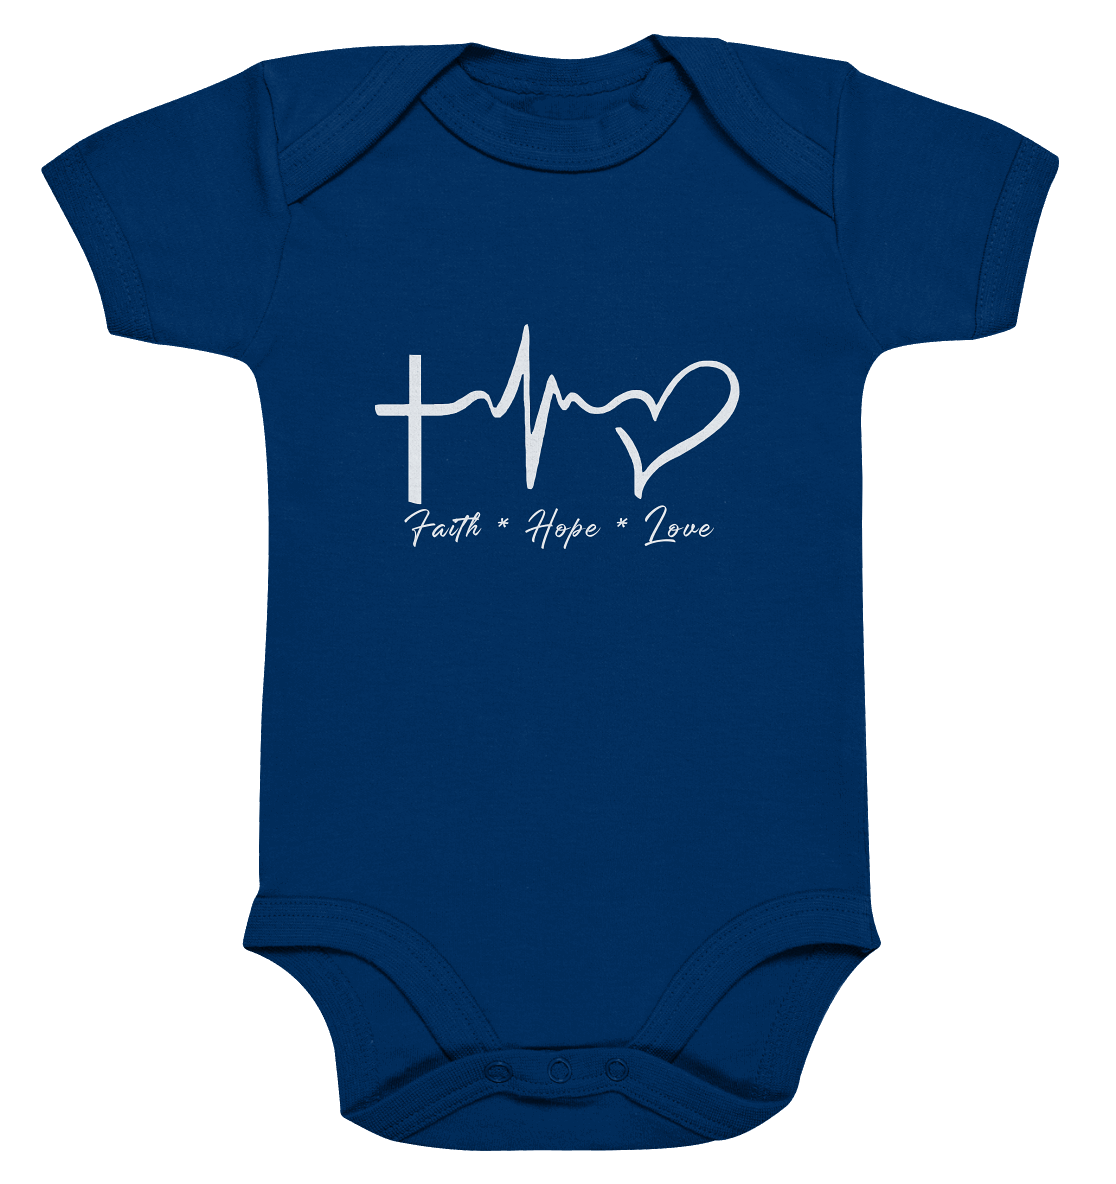 Faith * Hope * Love - Organic Baby Bodysuite